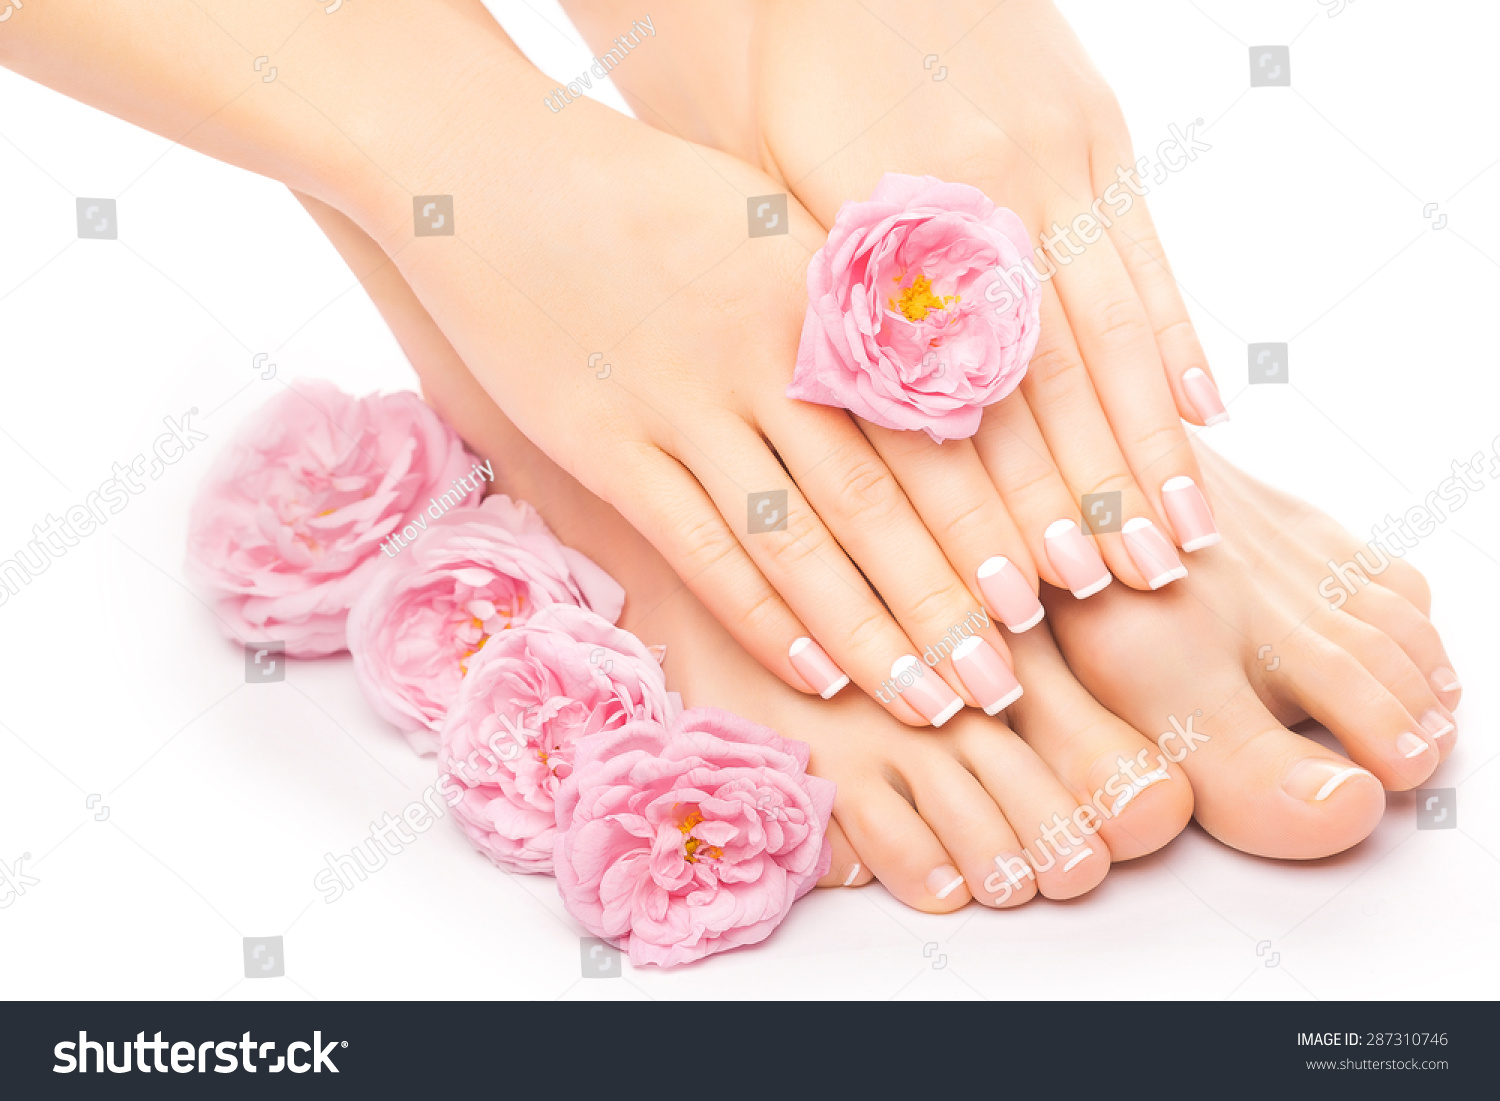 Стоковая фотография 287310746: Relaxing Pedicure Manicure Pink Rose Flower ...